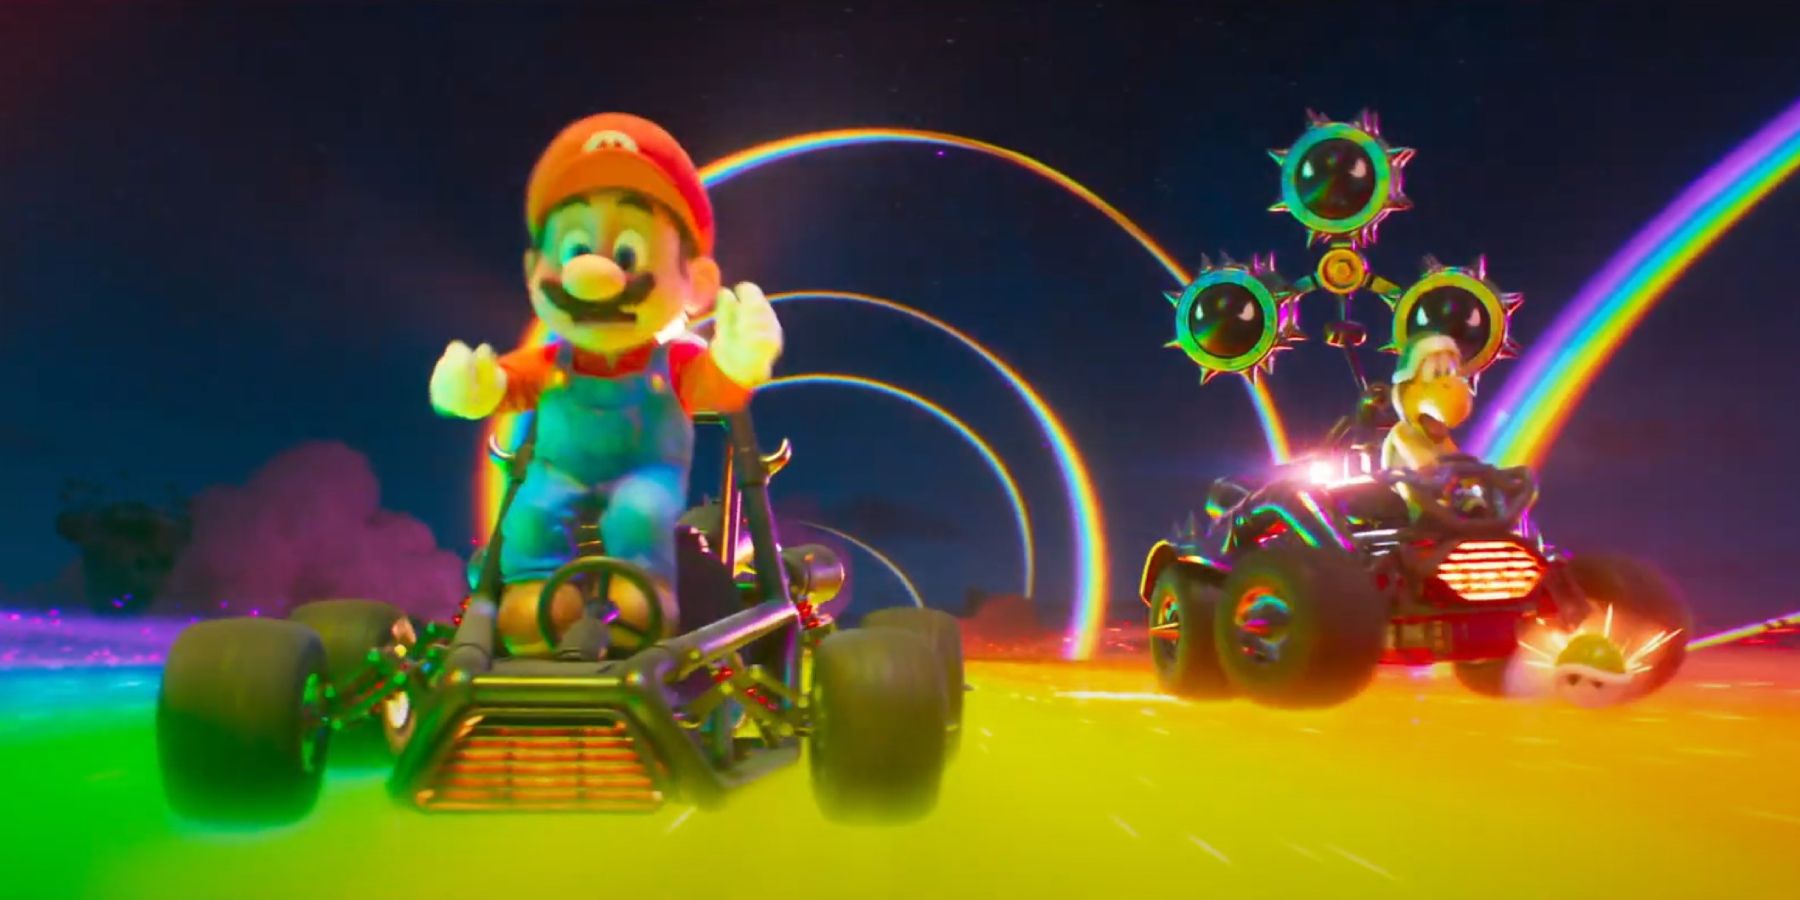 Mario jumping in kart in Rainbow Road Super Mario Bros. movie